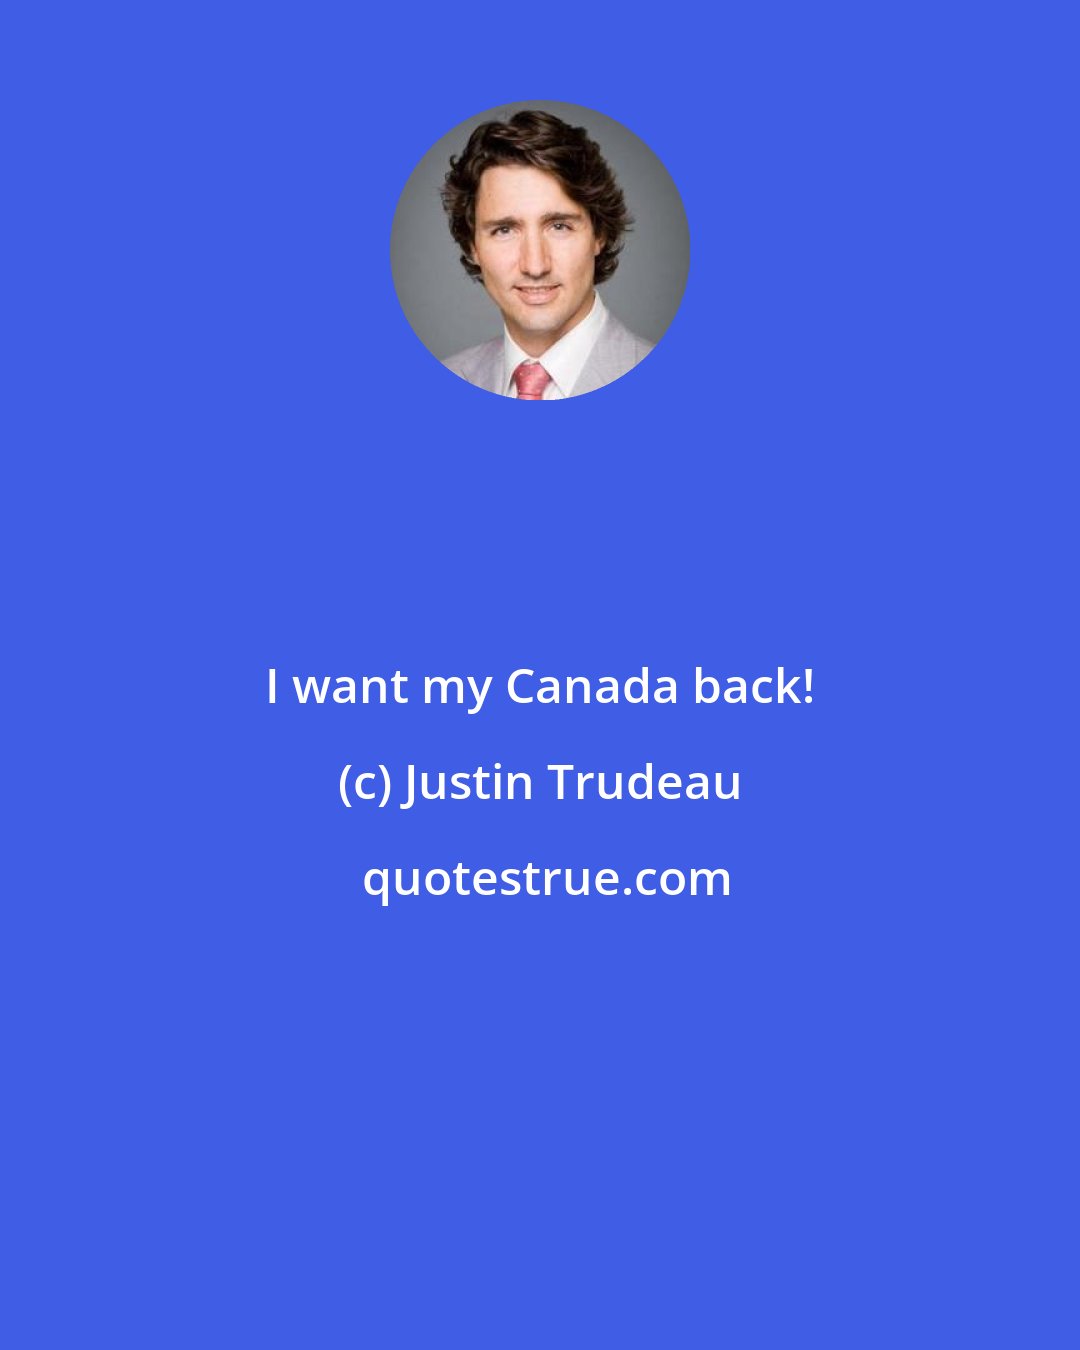 Justin Trudeau: I want my Canada back!